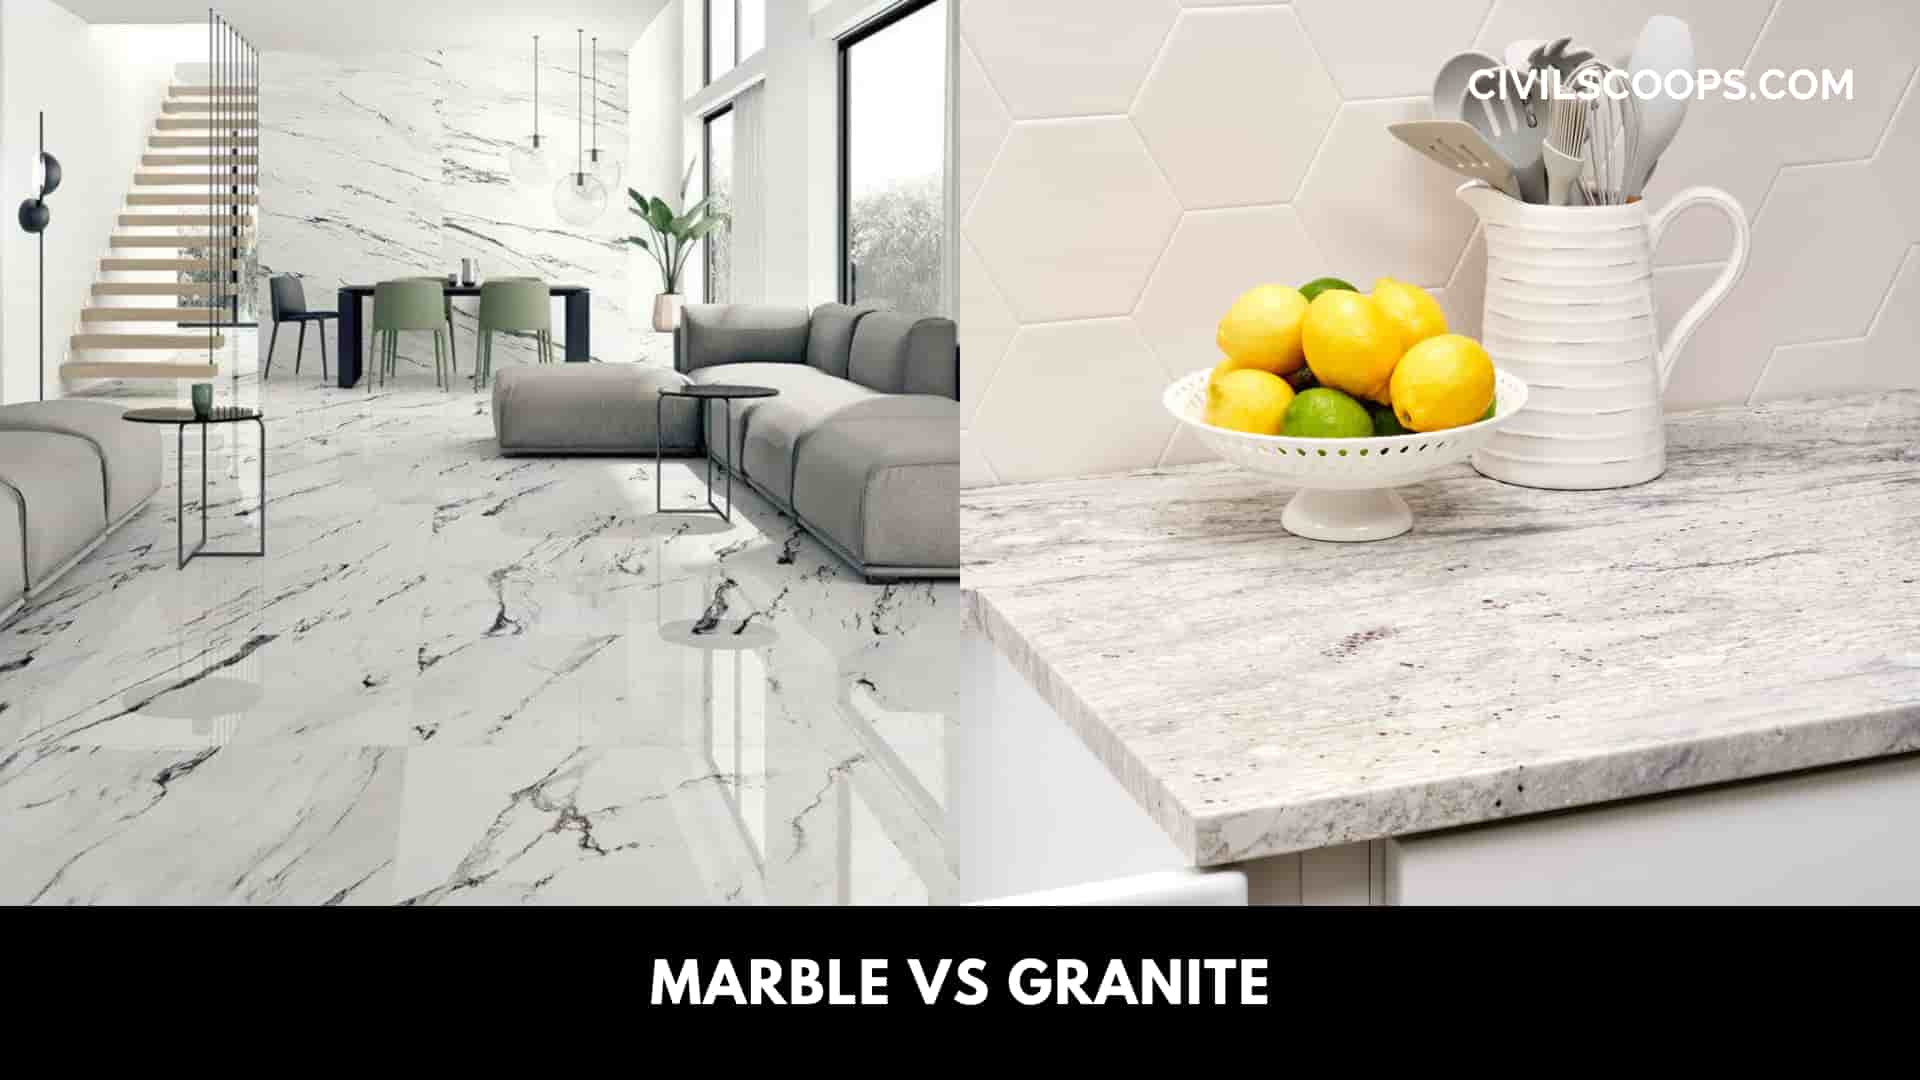 Marble Vs Granite